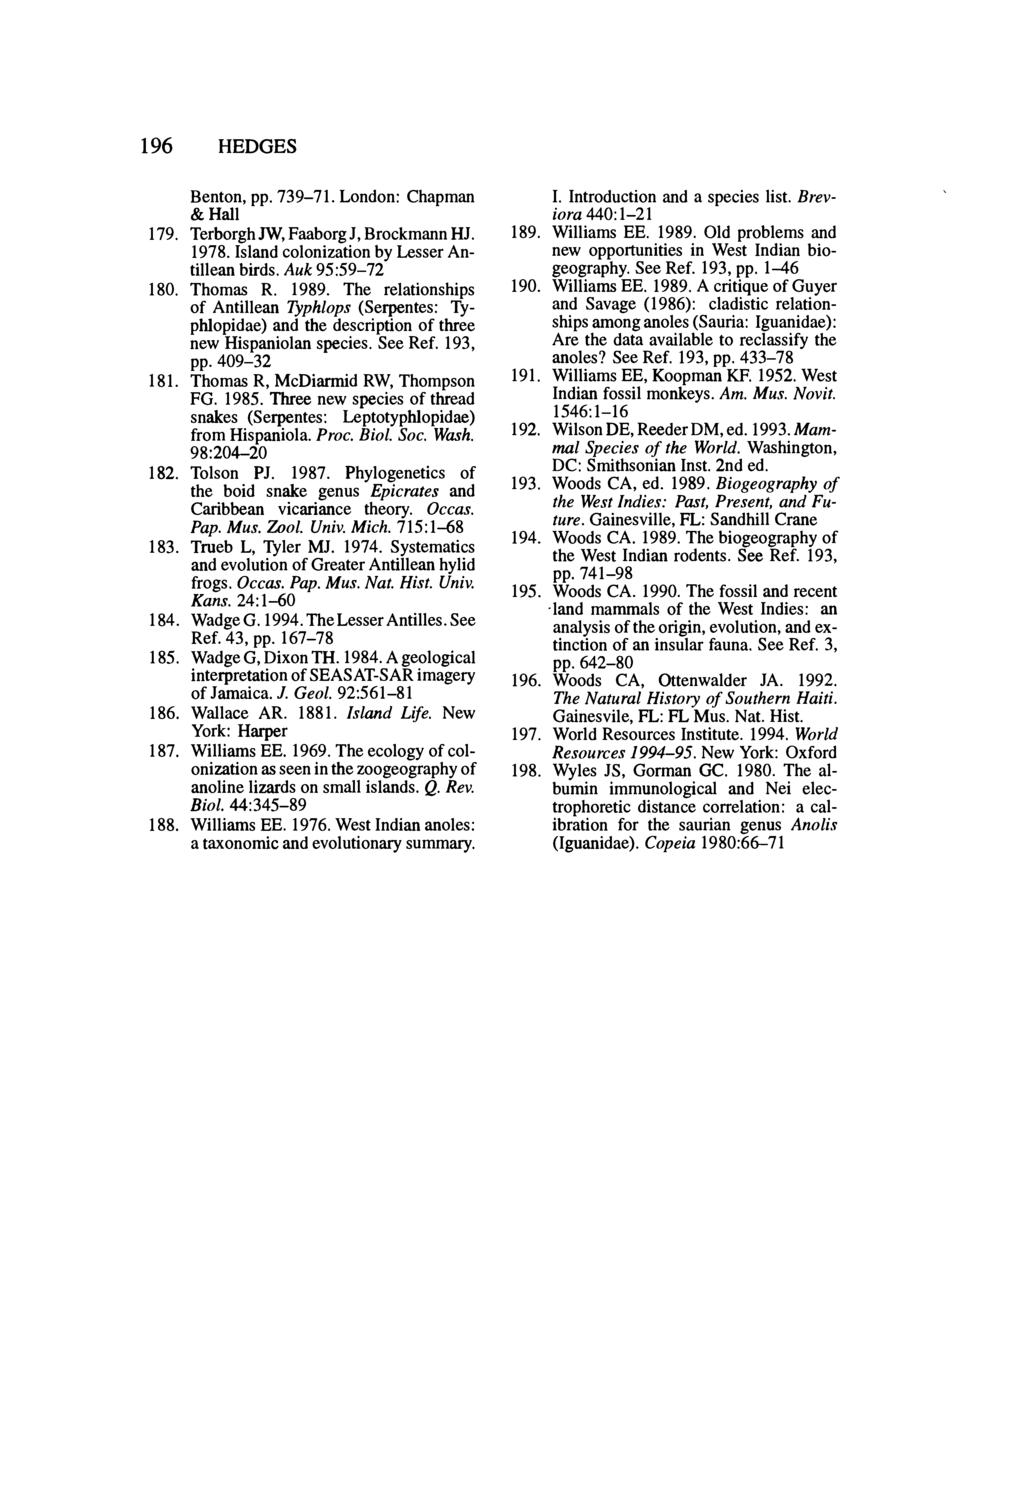 196 HEDGES Benton, pp. 739-71. London: Chapman & Hall 179. Terborgh IW, Faaborg J, Brockmann Hl. 1978. Island colonization by Lesser Antillean birds. Auk 95:59-72 180. Thomas R. 1989.